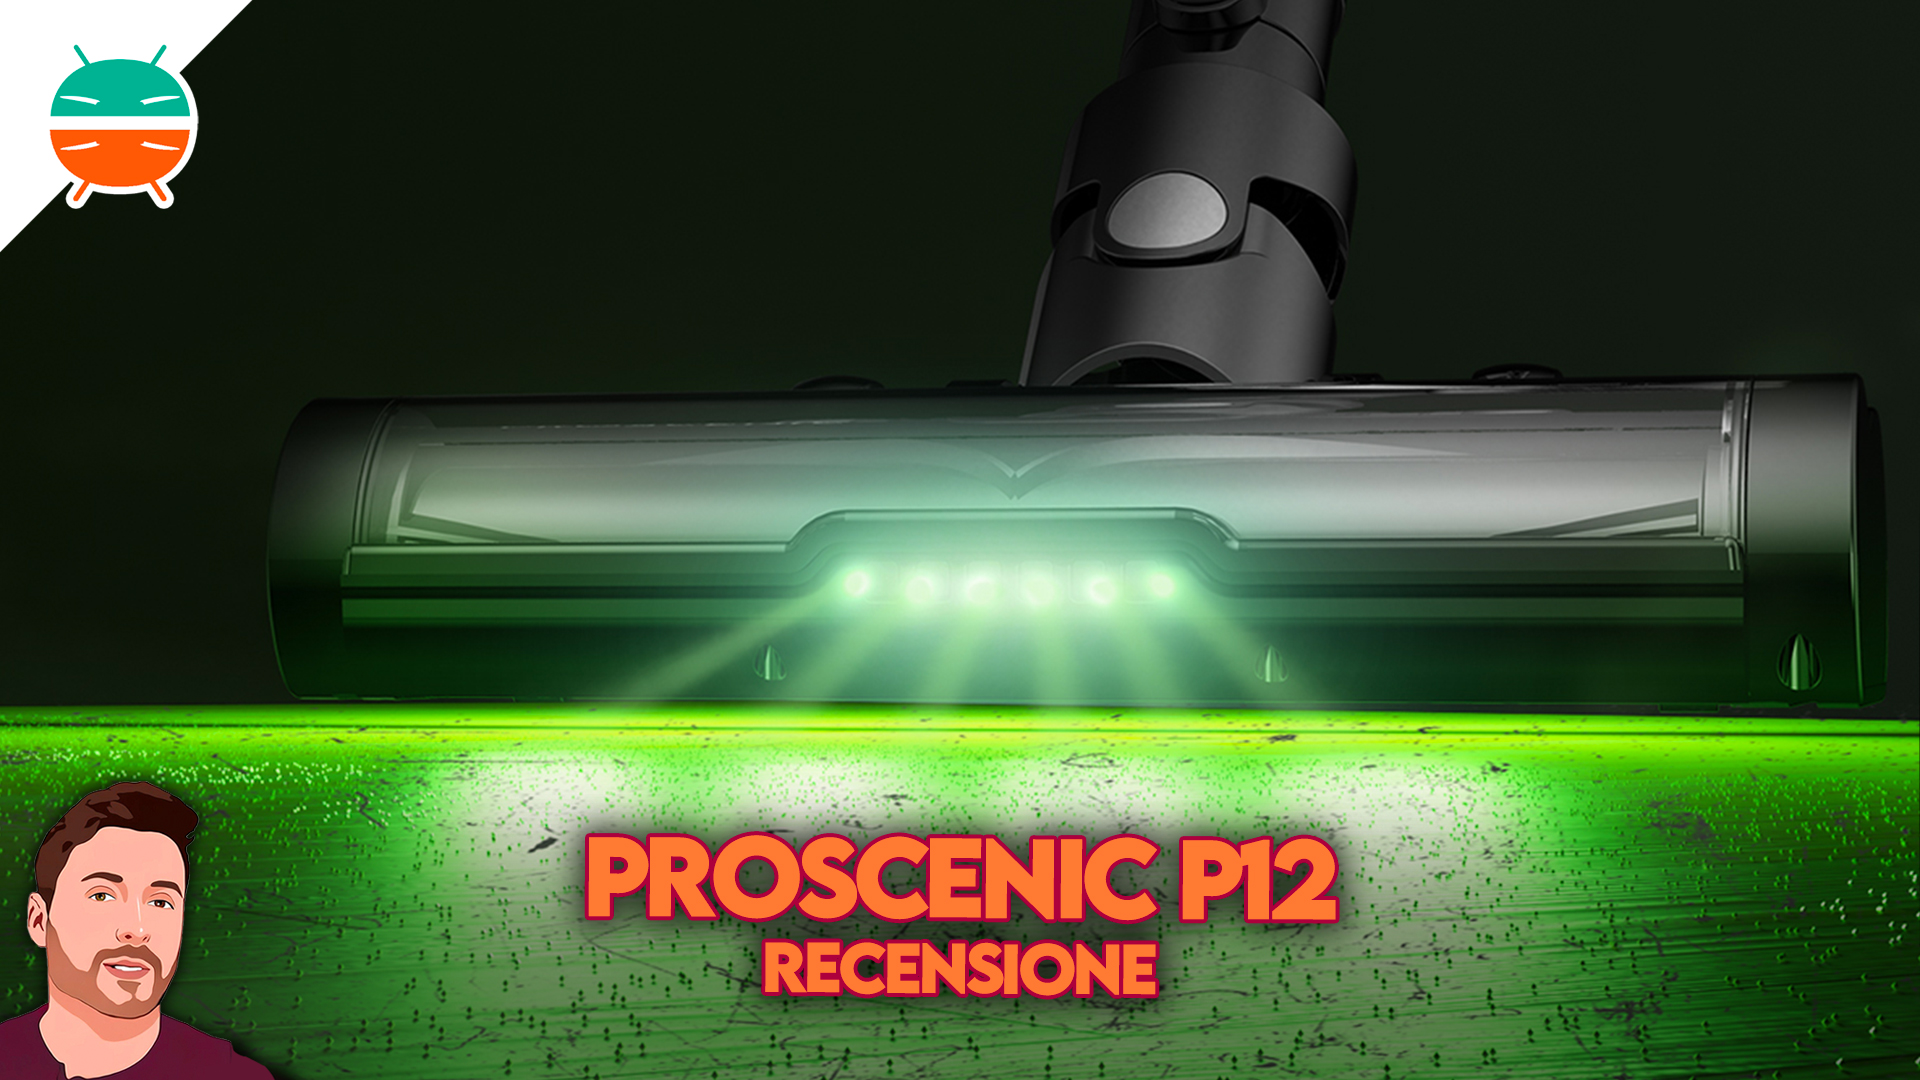 Revisión de Proscenic P12: mucha potencia, precio económico - GizChina.it